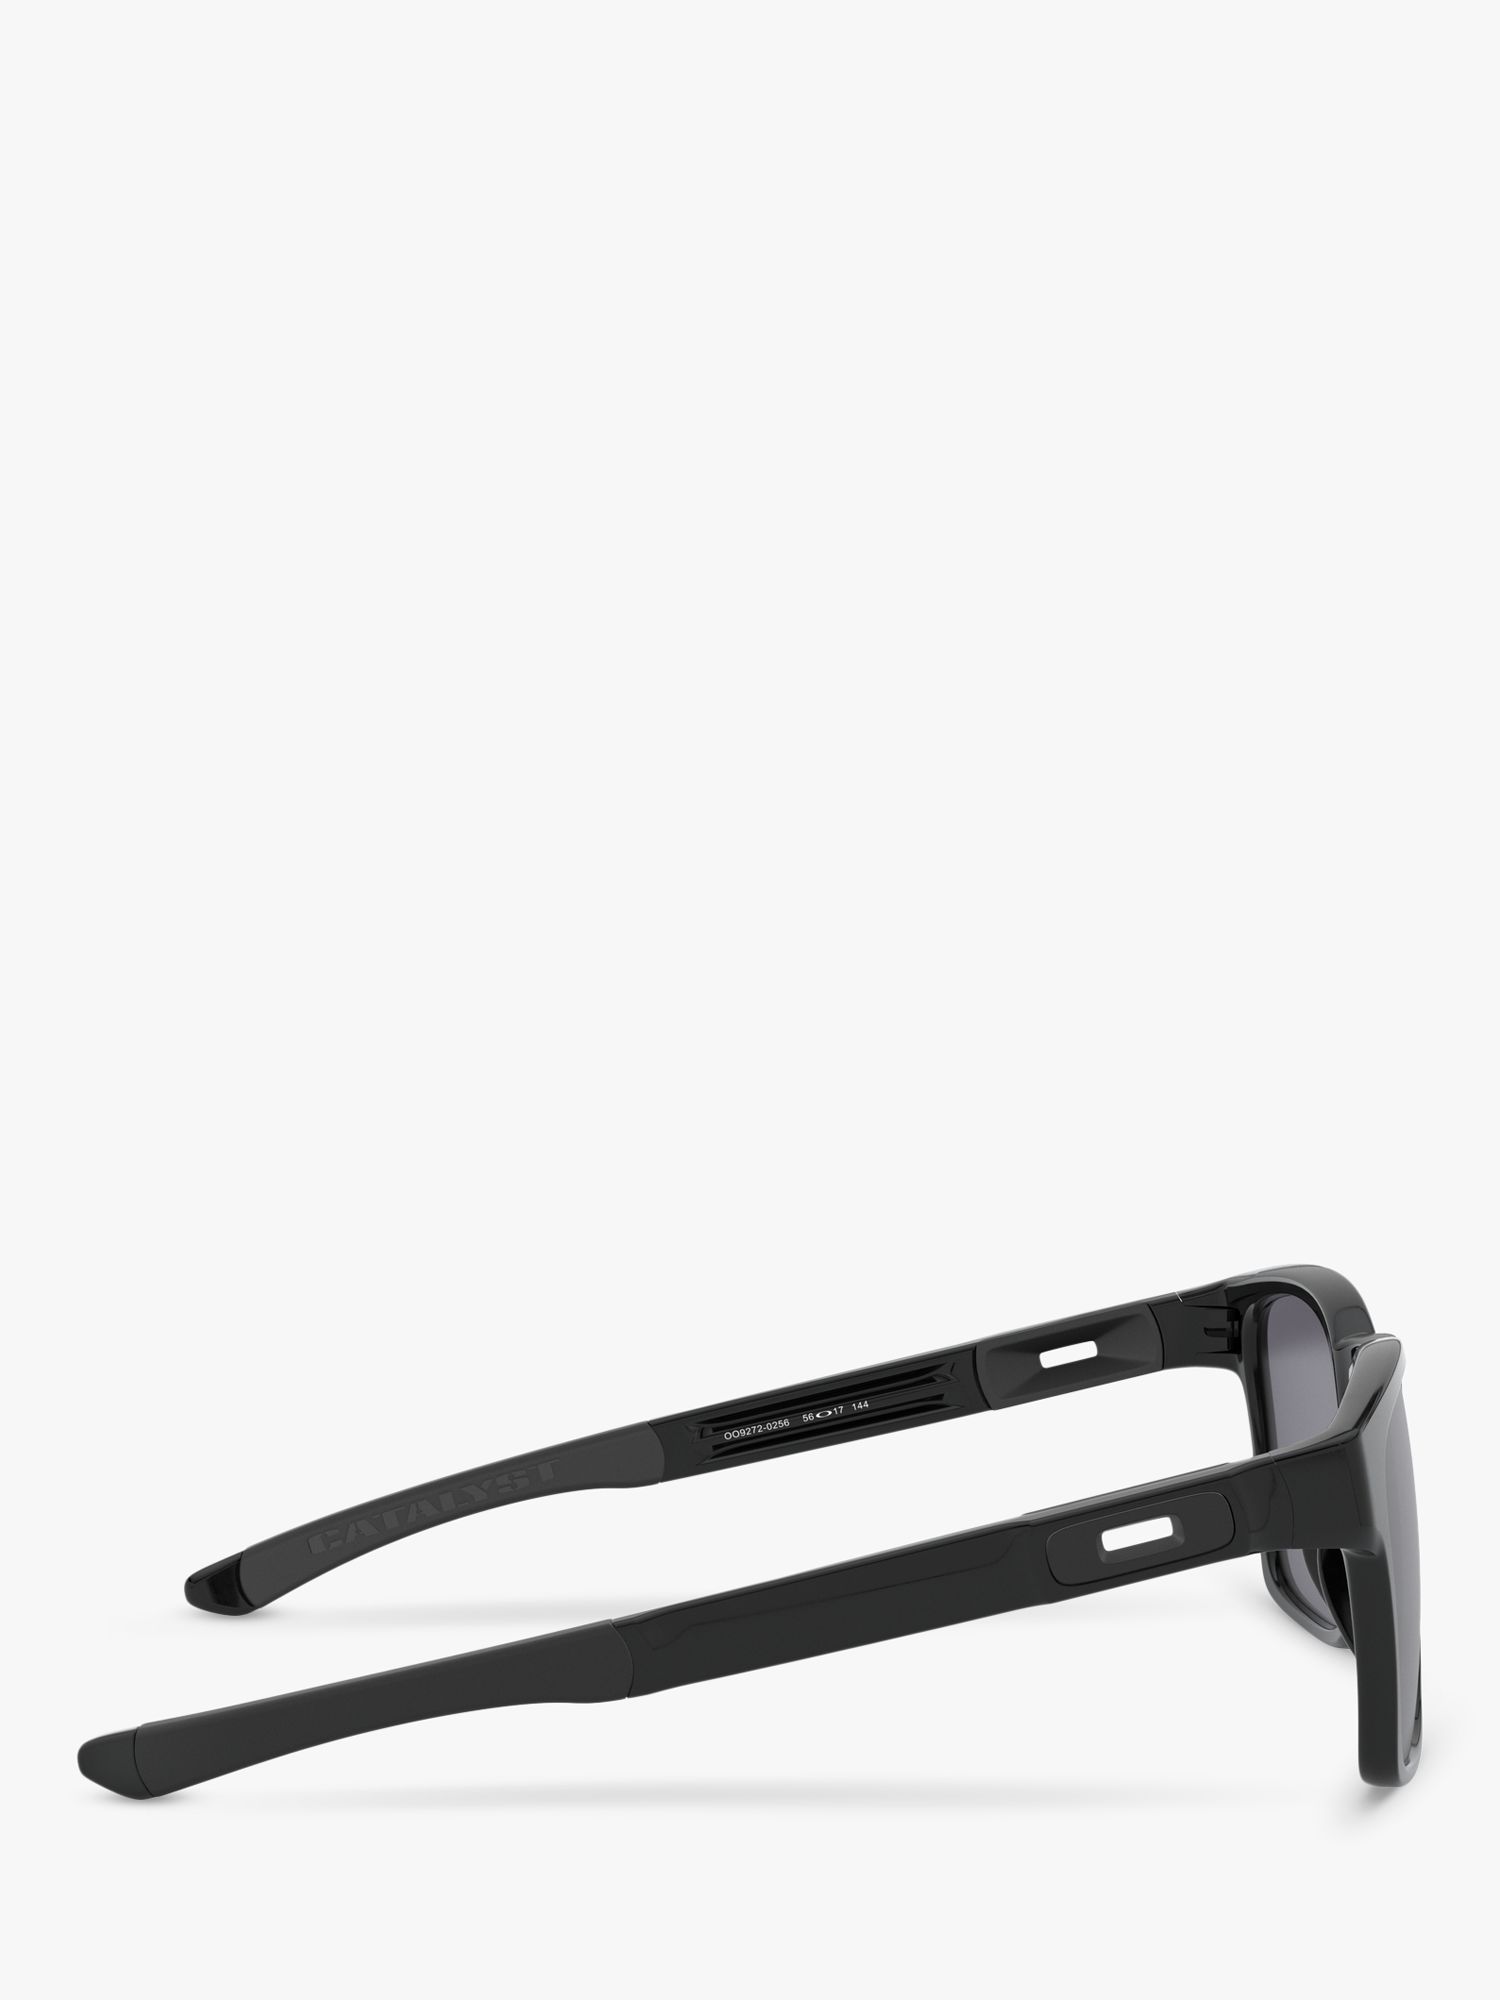 Oakley OO9272 Men's Catalyst Rectangular Sunglasses, Polished Black/Grey